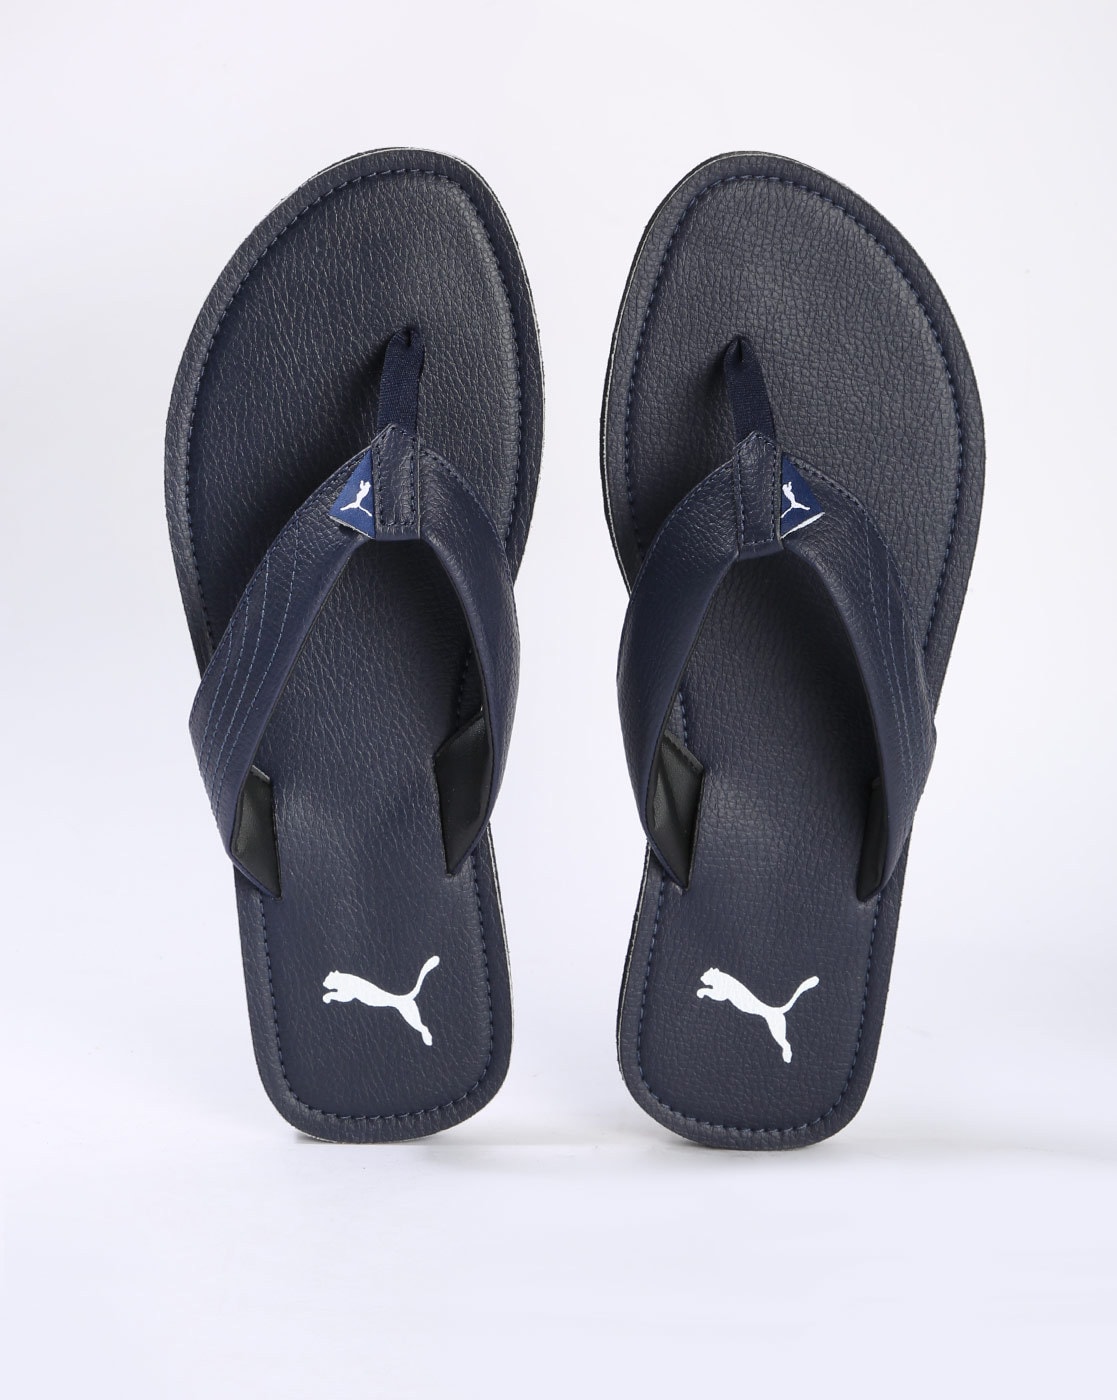 puma sandals navy blue